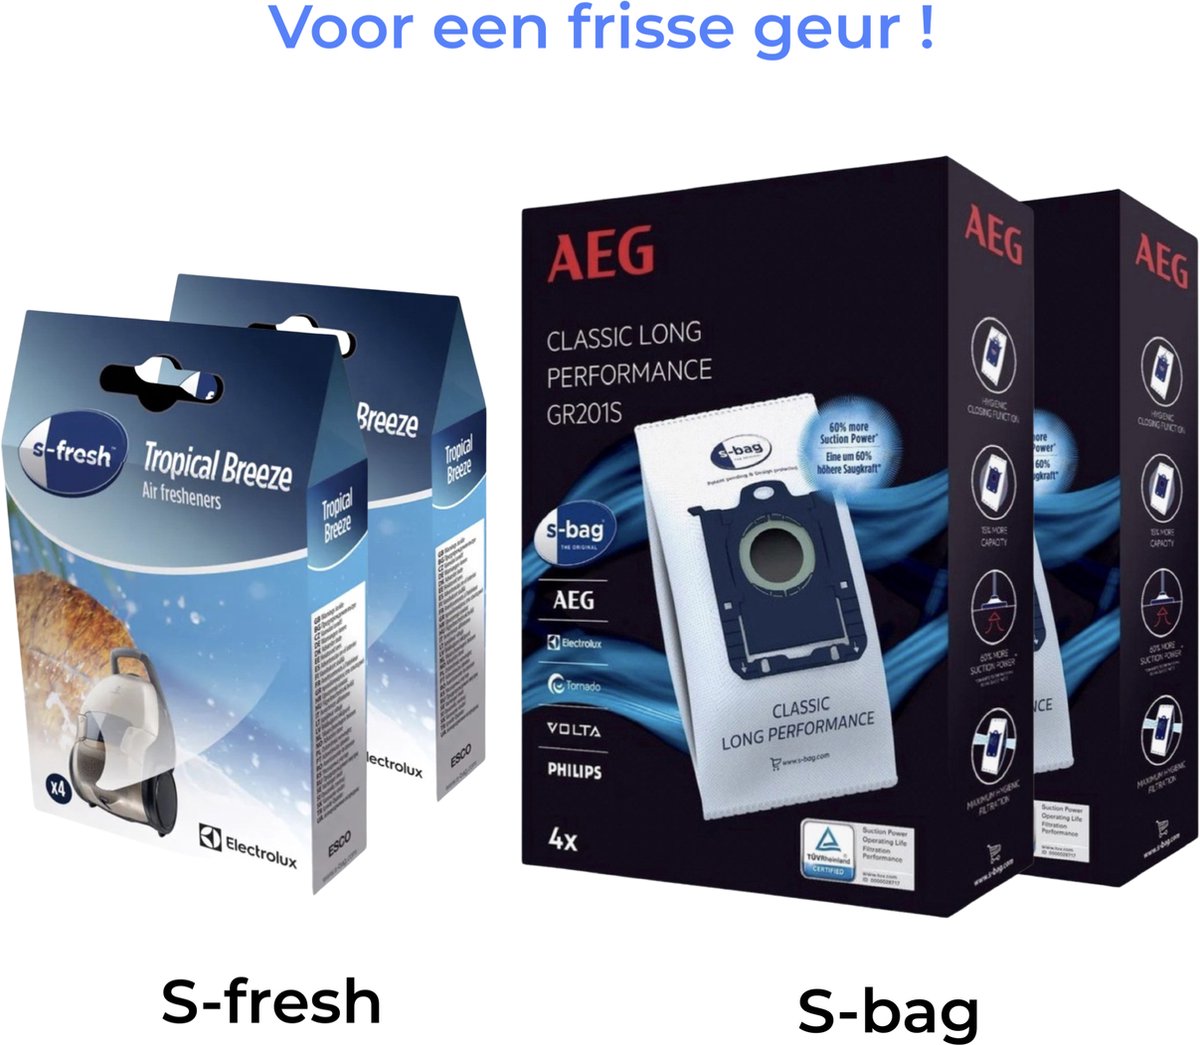 AEG - 2x S-BAG stofzuigerzakken + 2x S-FRESH Geurkorrels (tropical breeze) - Air fresheners - Geurparels - Voor Stofzuigers - COMBIDEAL